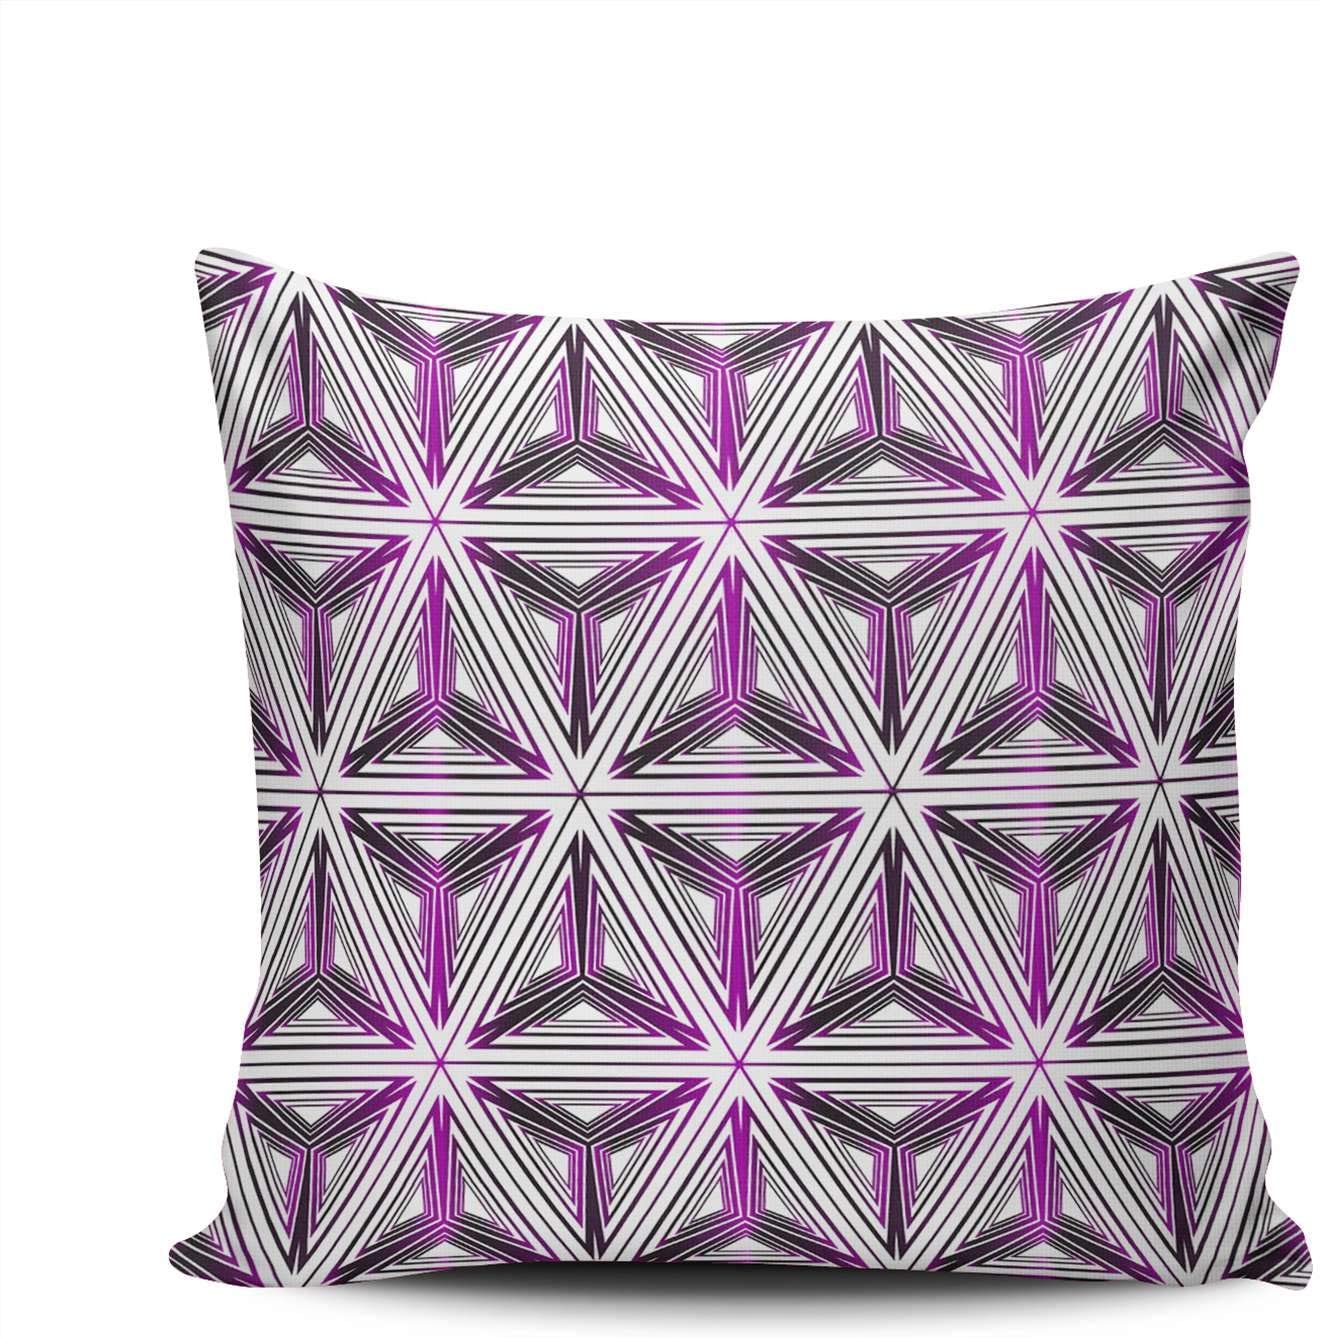 Amazon.com: SALLEING Fashion Home Decor Pillowcase Geometrical Cube ...